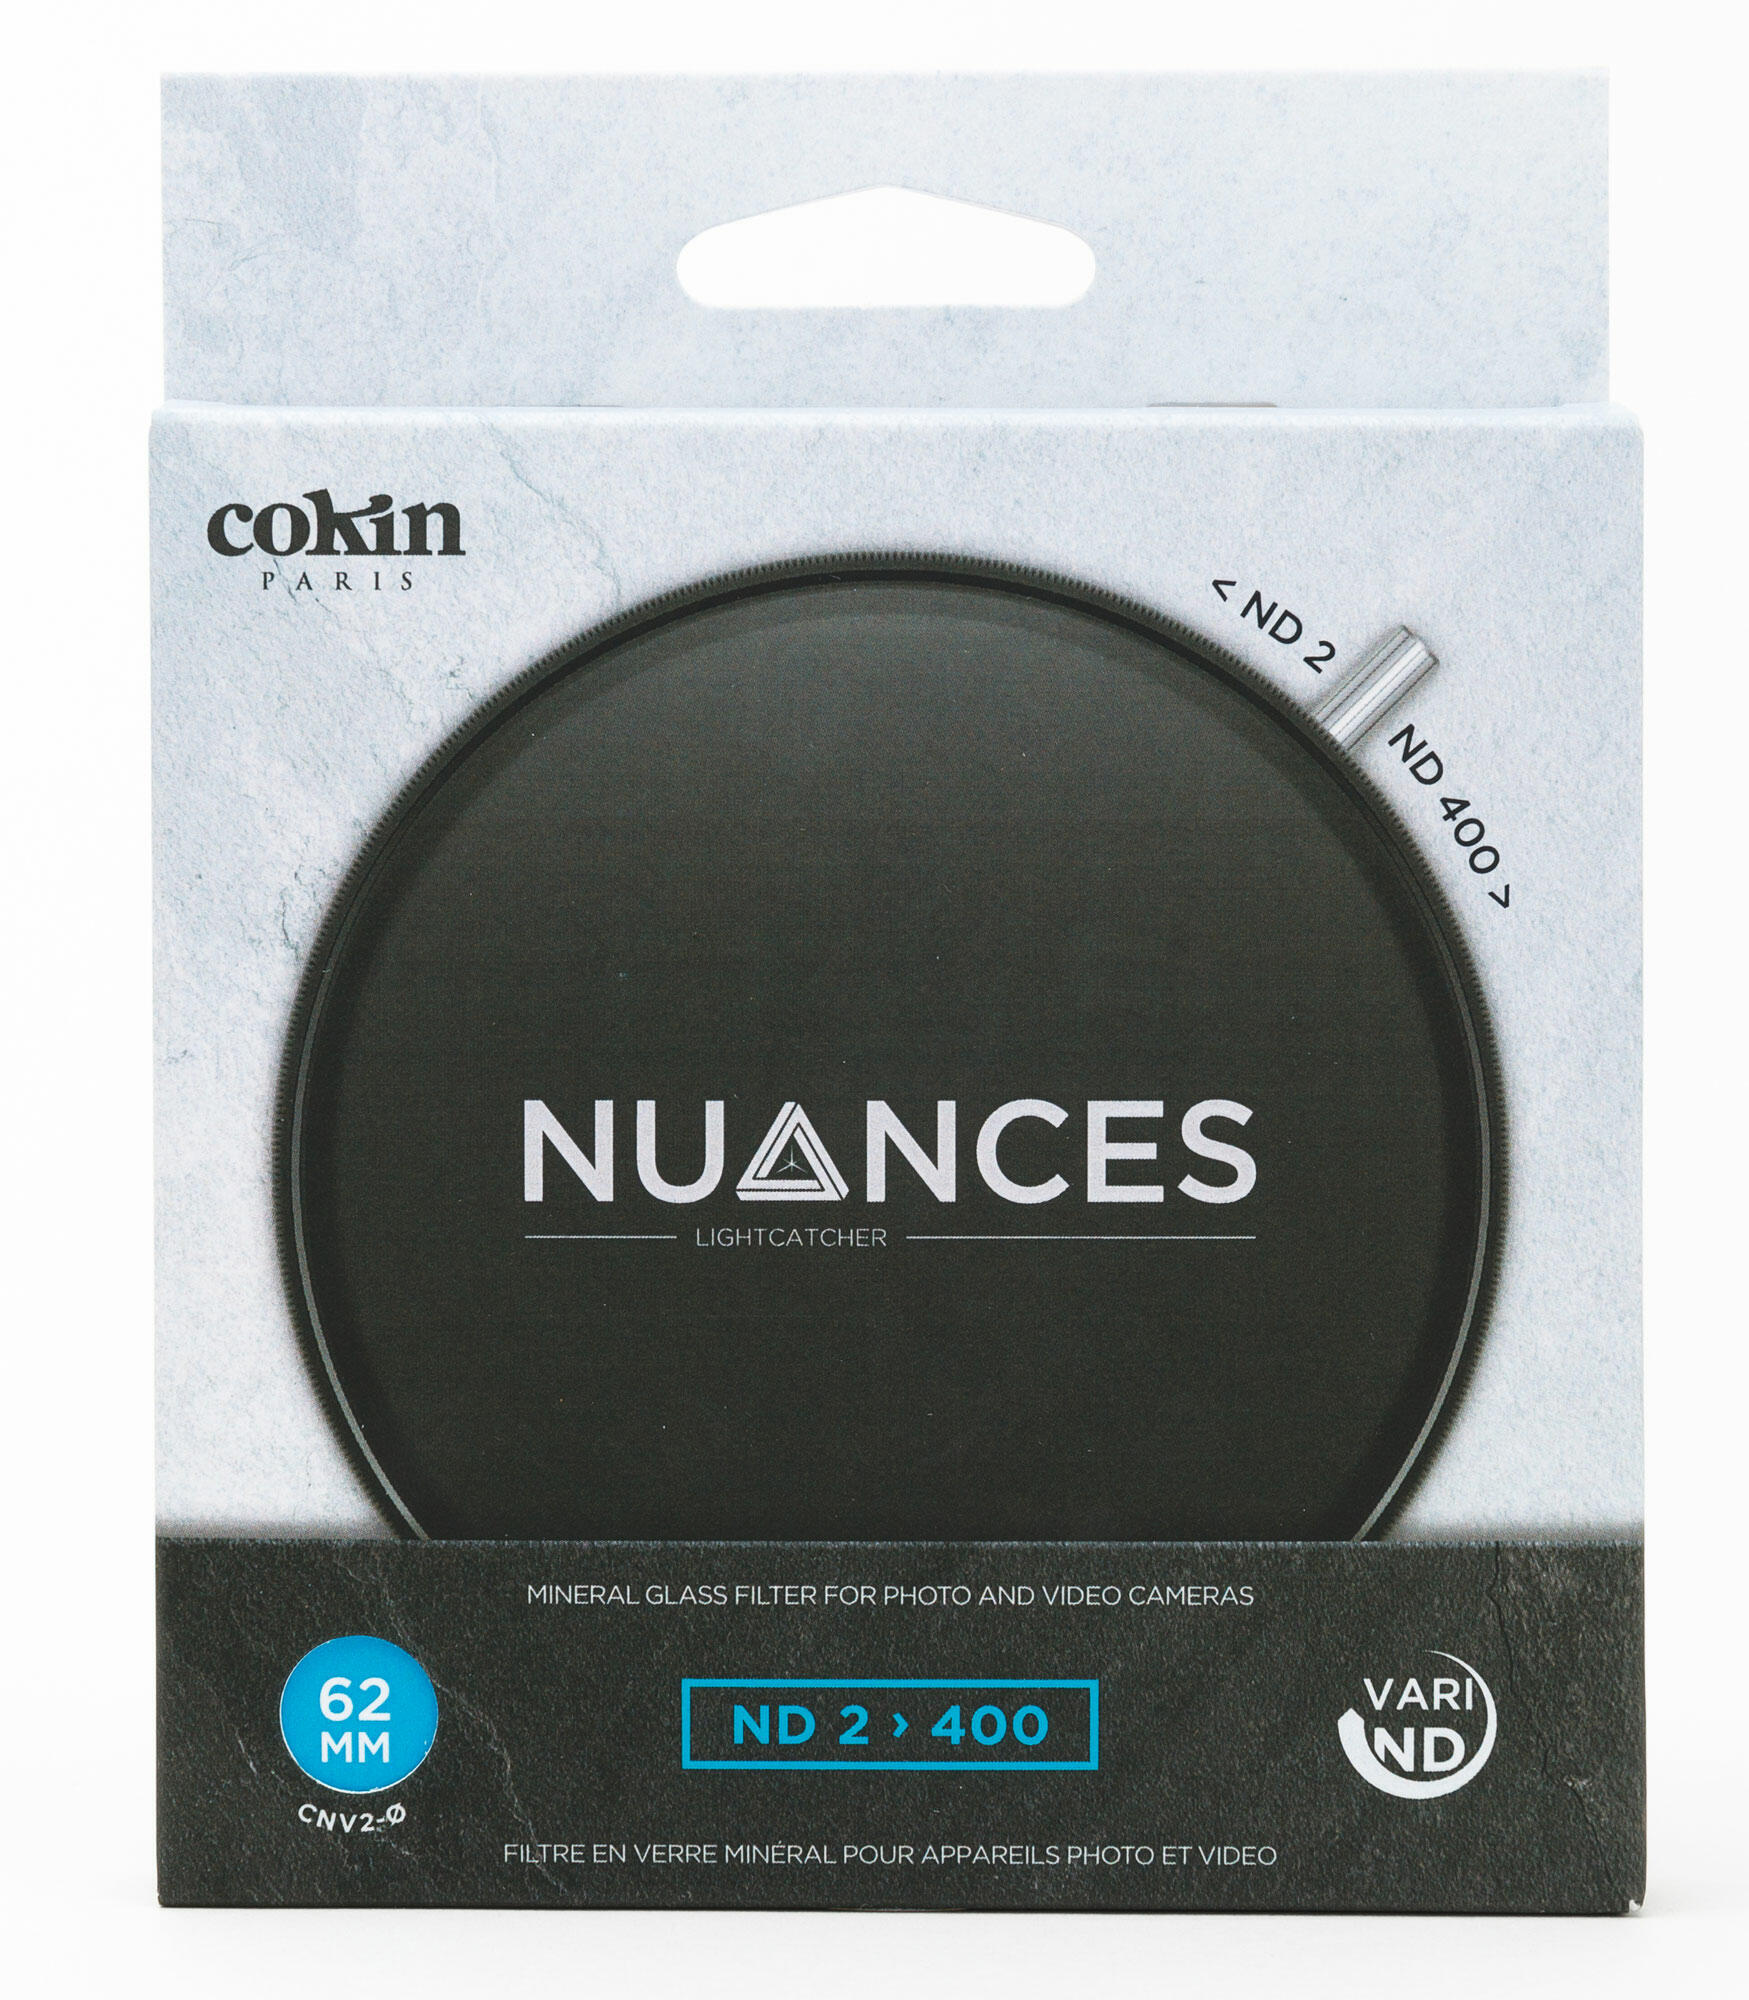 Cokin NUANCES バリアブル NDX2-400 | ケンコー・トキナー